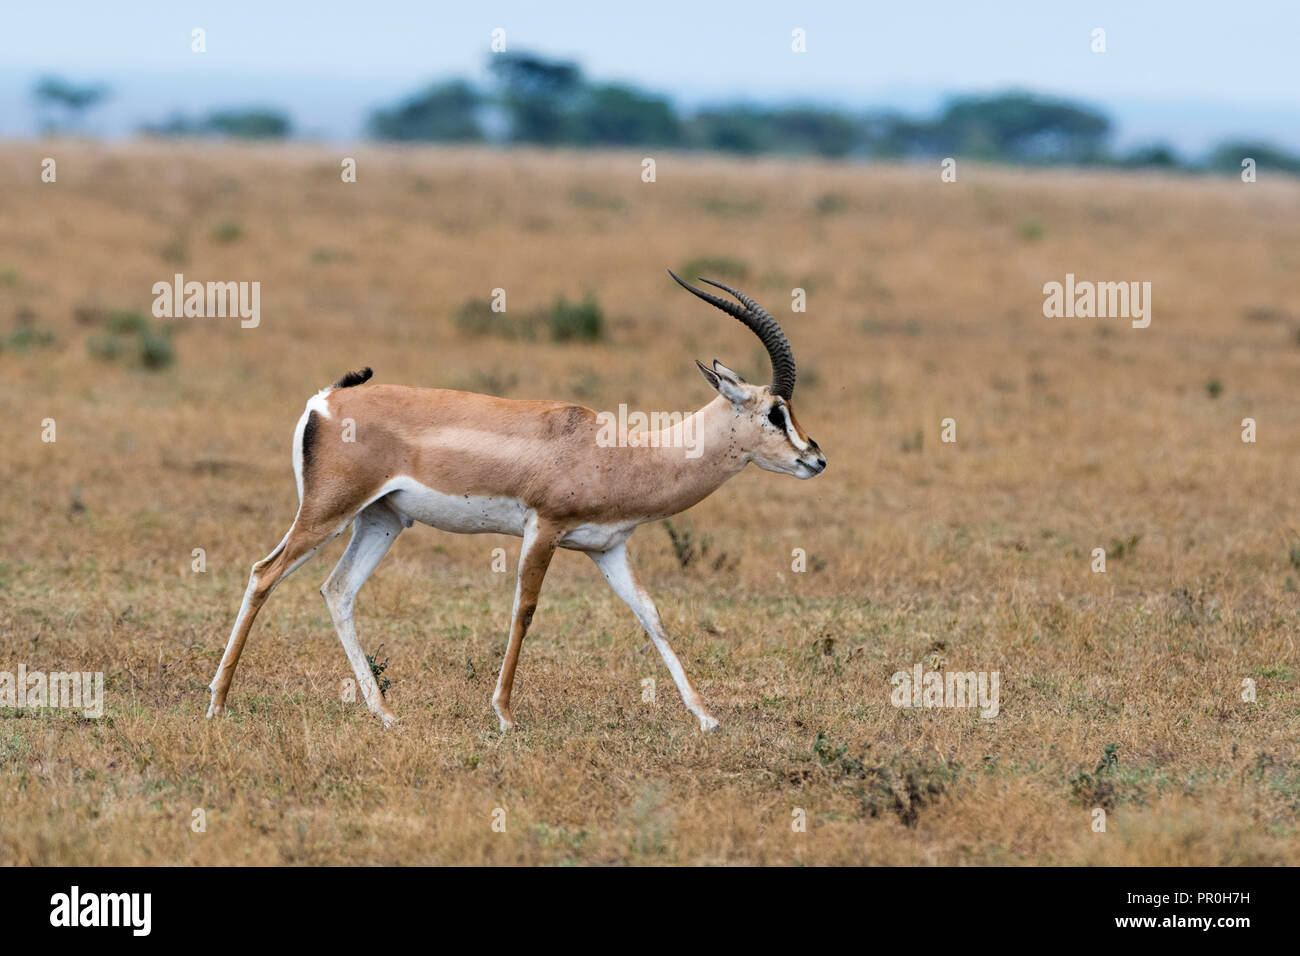 A Grant's gazelle (Nanger granti) walking, Tanzania, East Africa, Africa Stock Photo